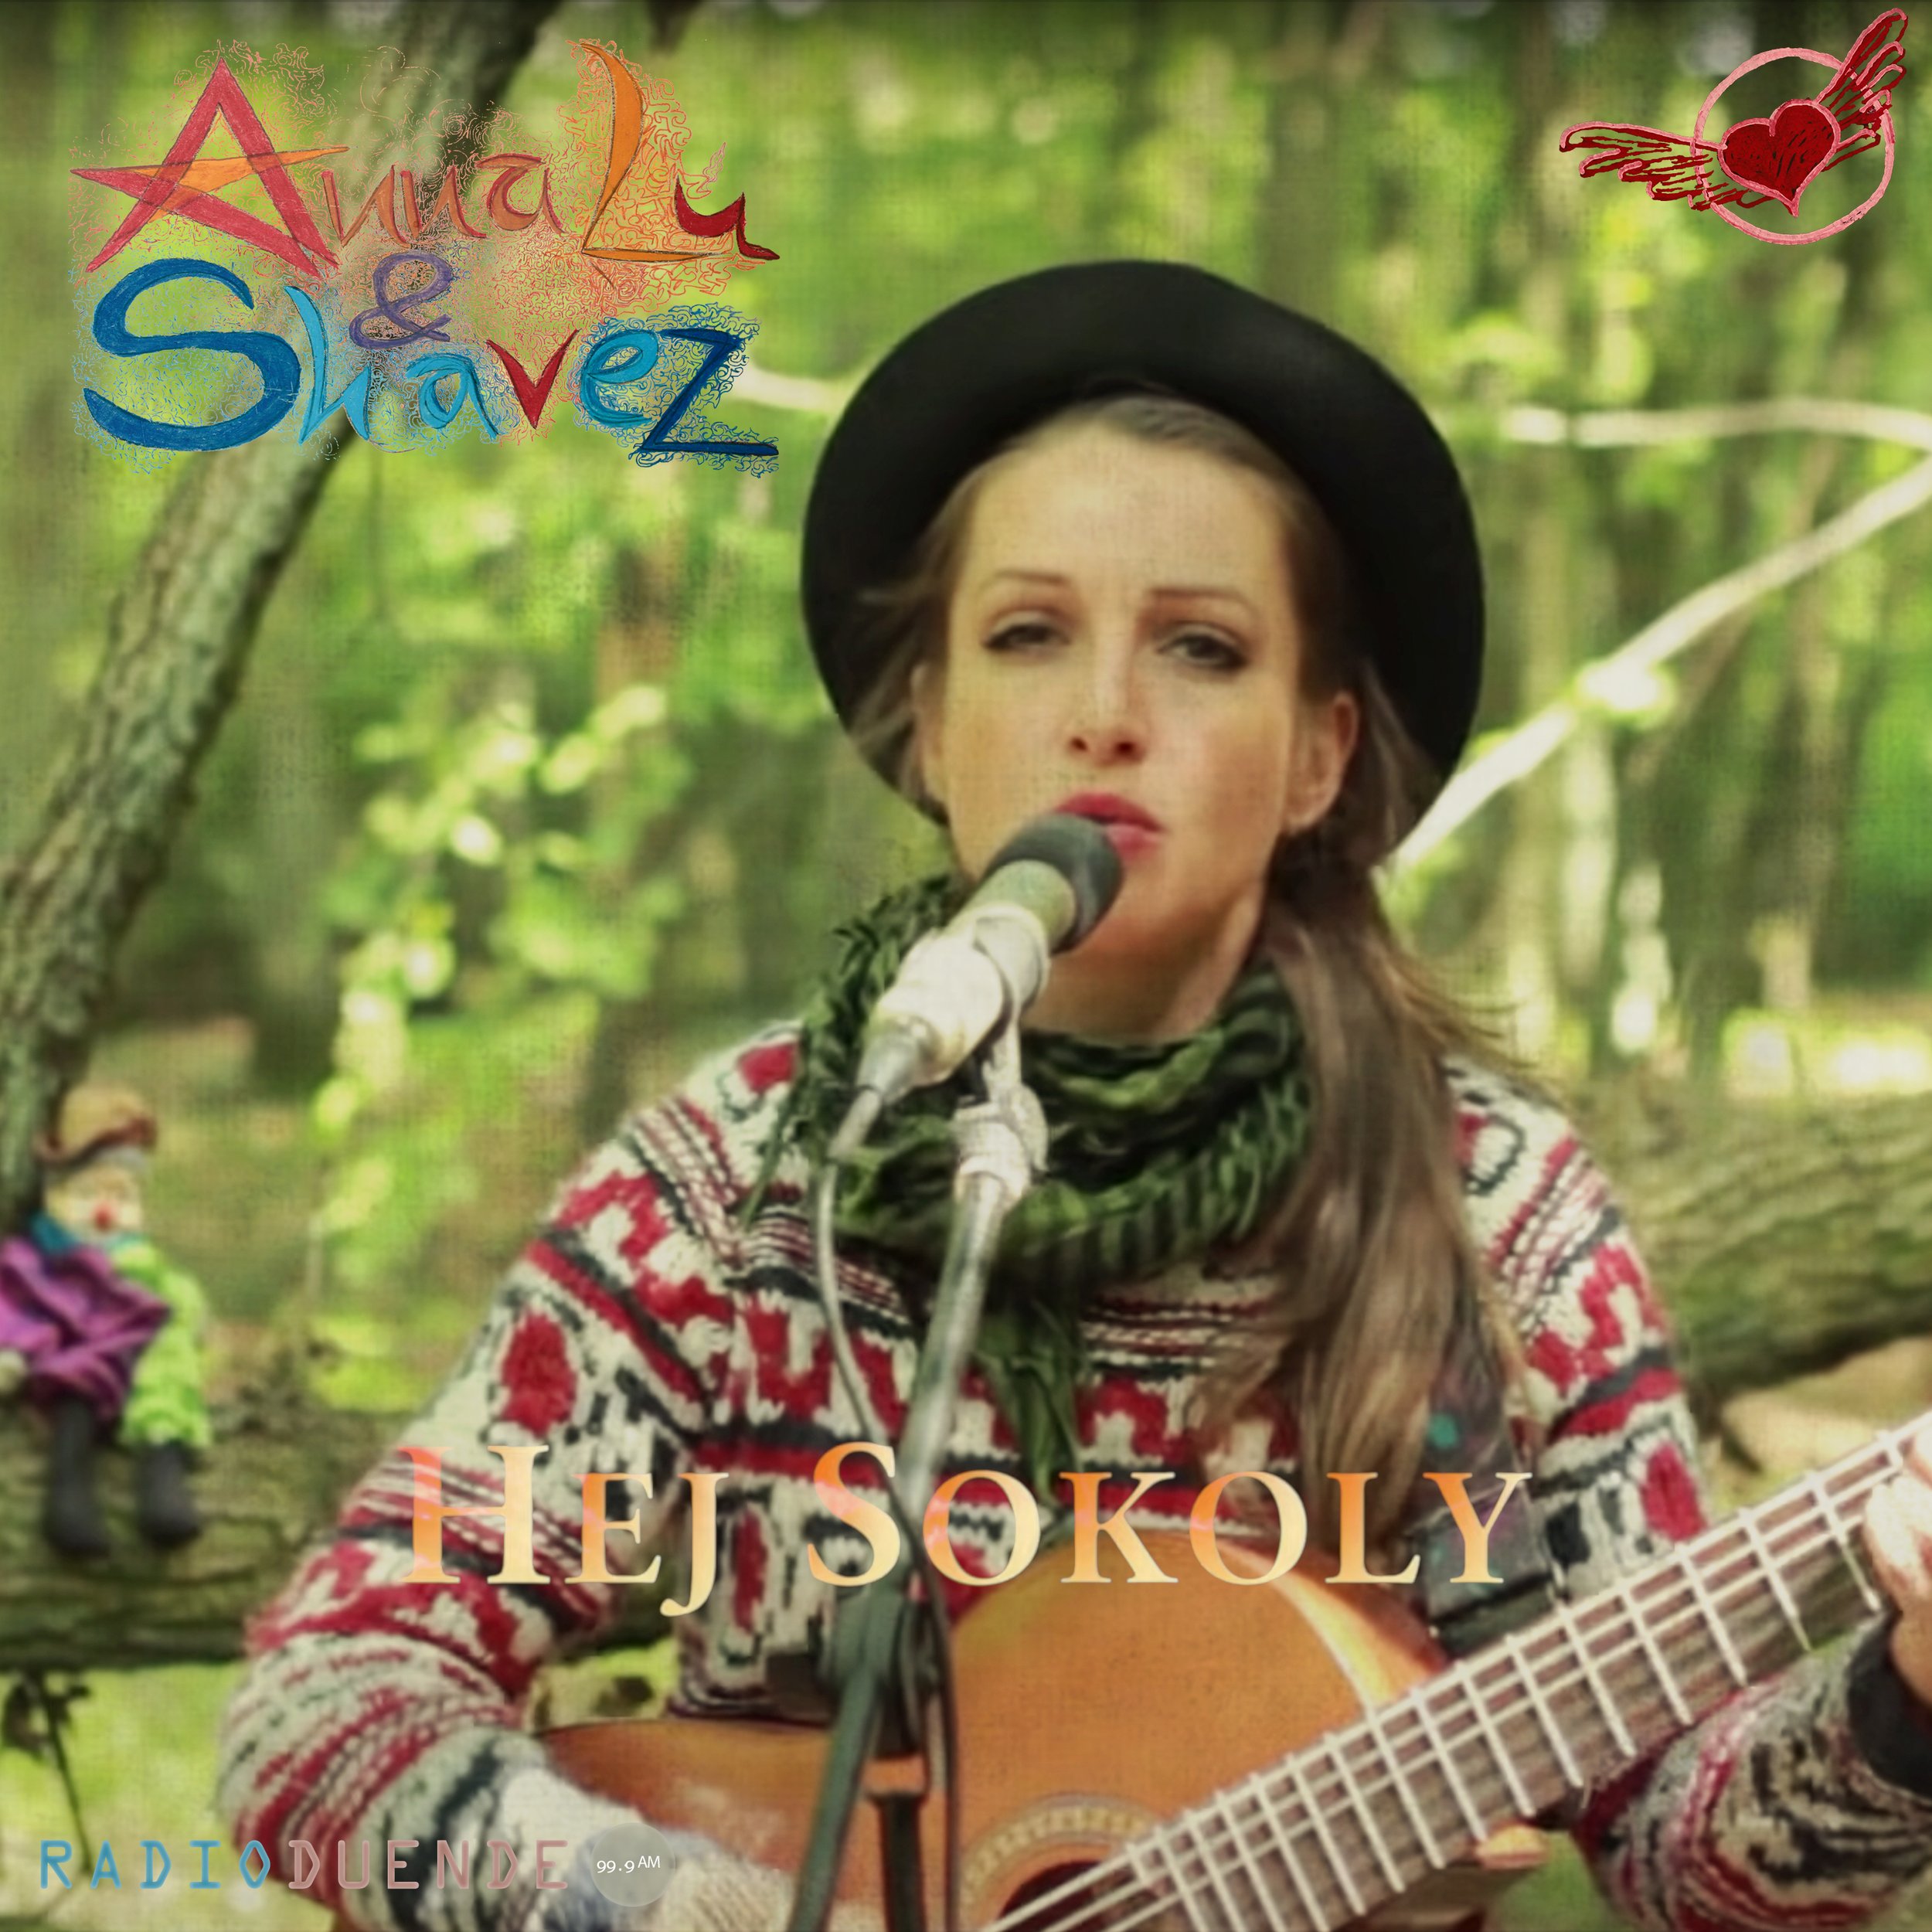 2022 - ANNALU &amp; SHAVEZ - Hej Sokoly (single)